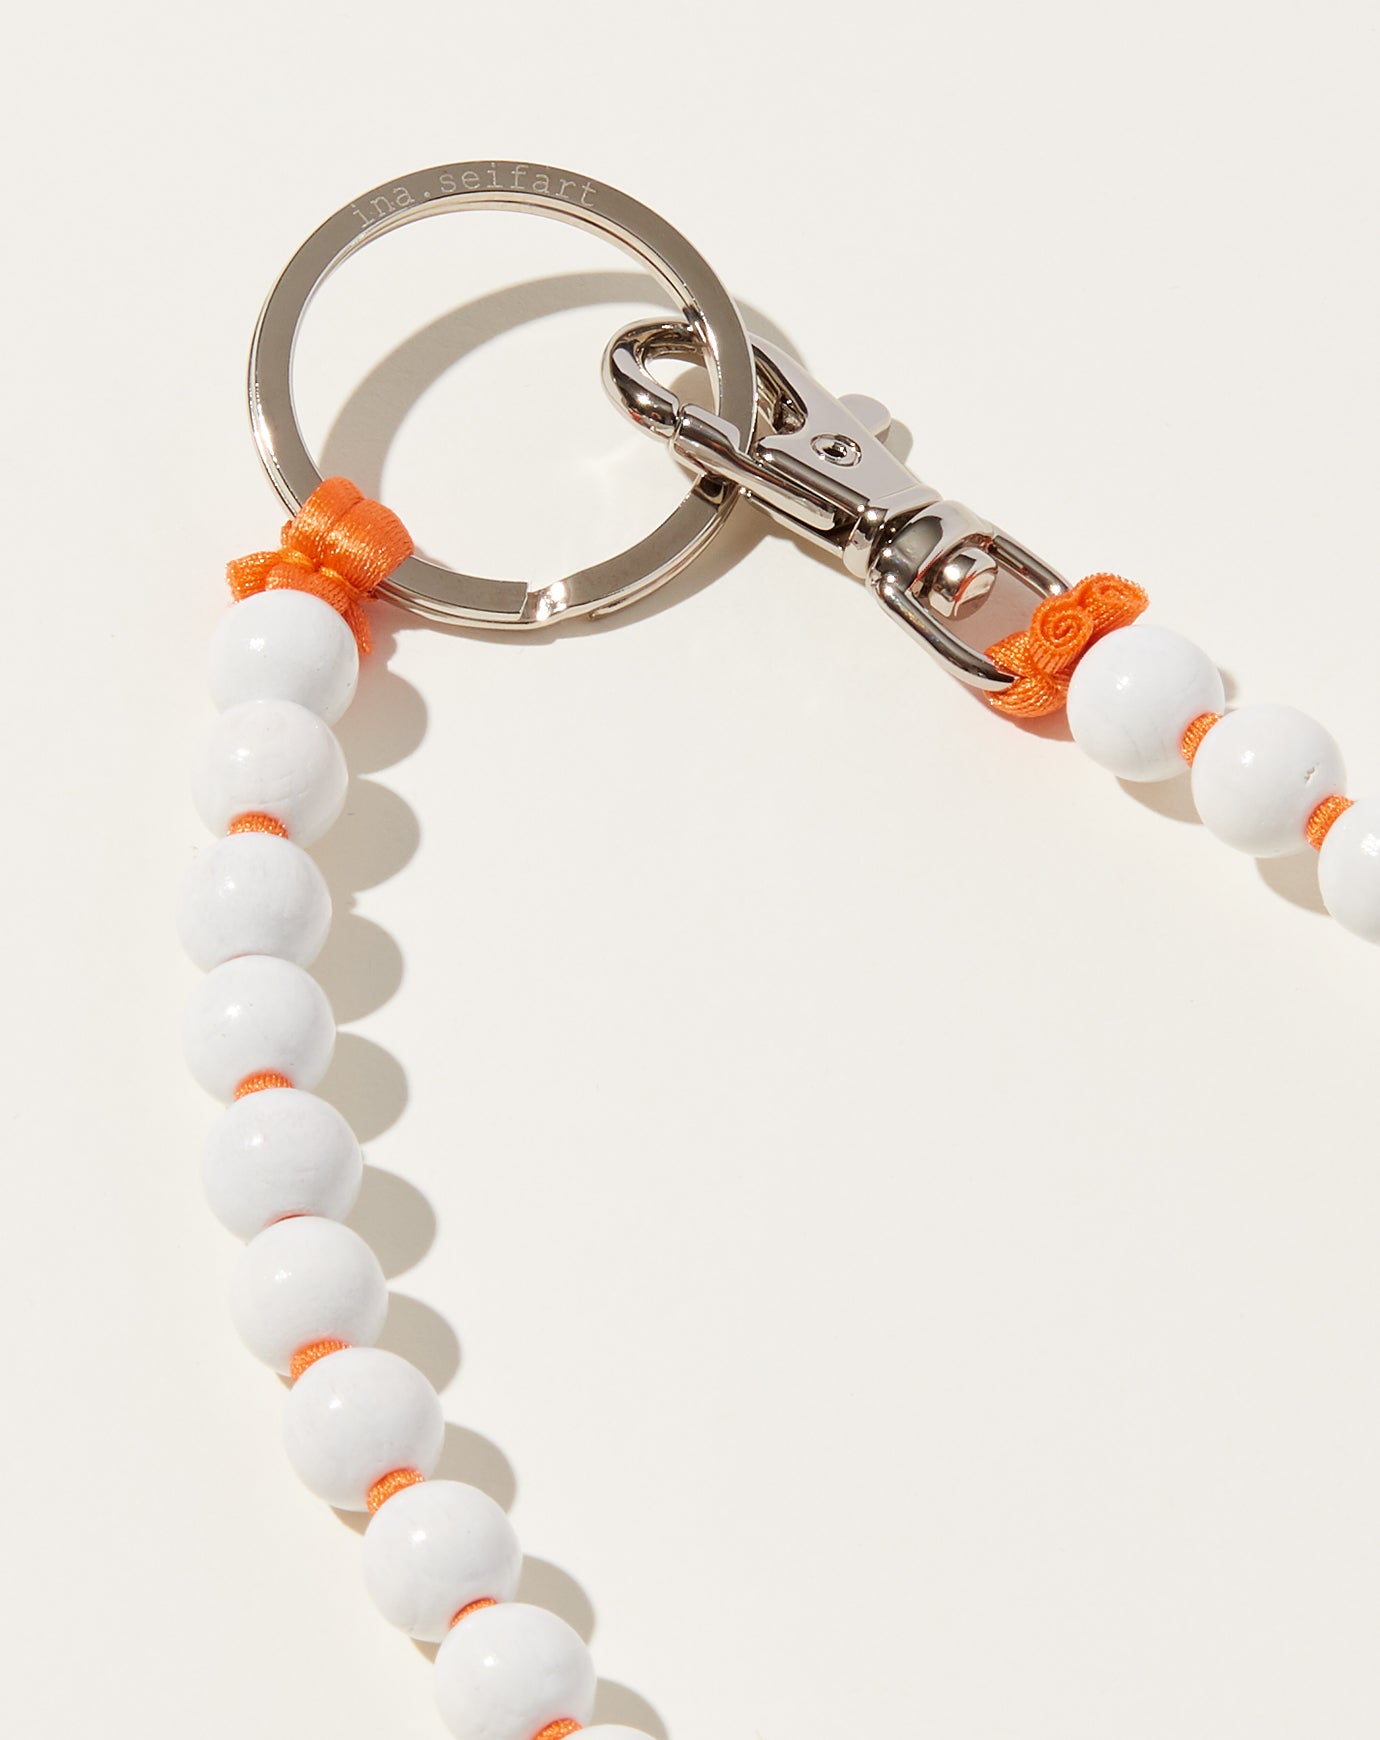 Ina Seifart Perlen Long Keyholder in White on Orange